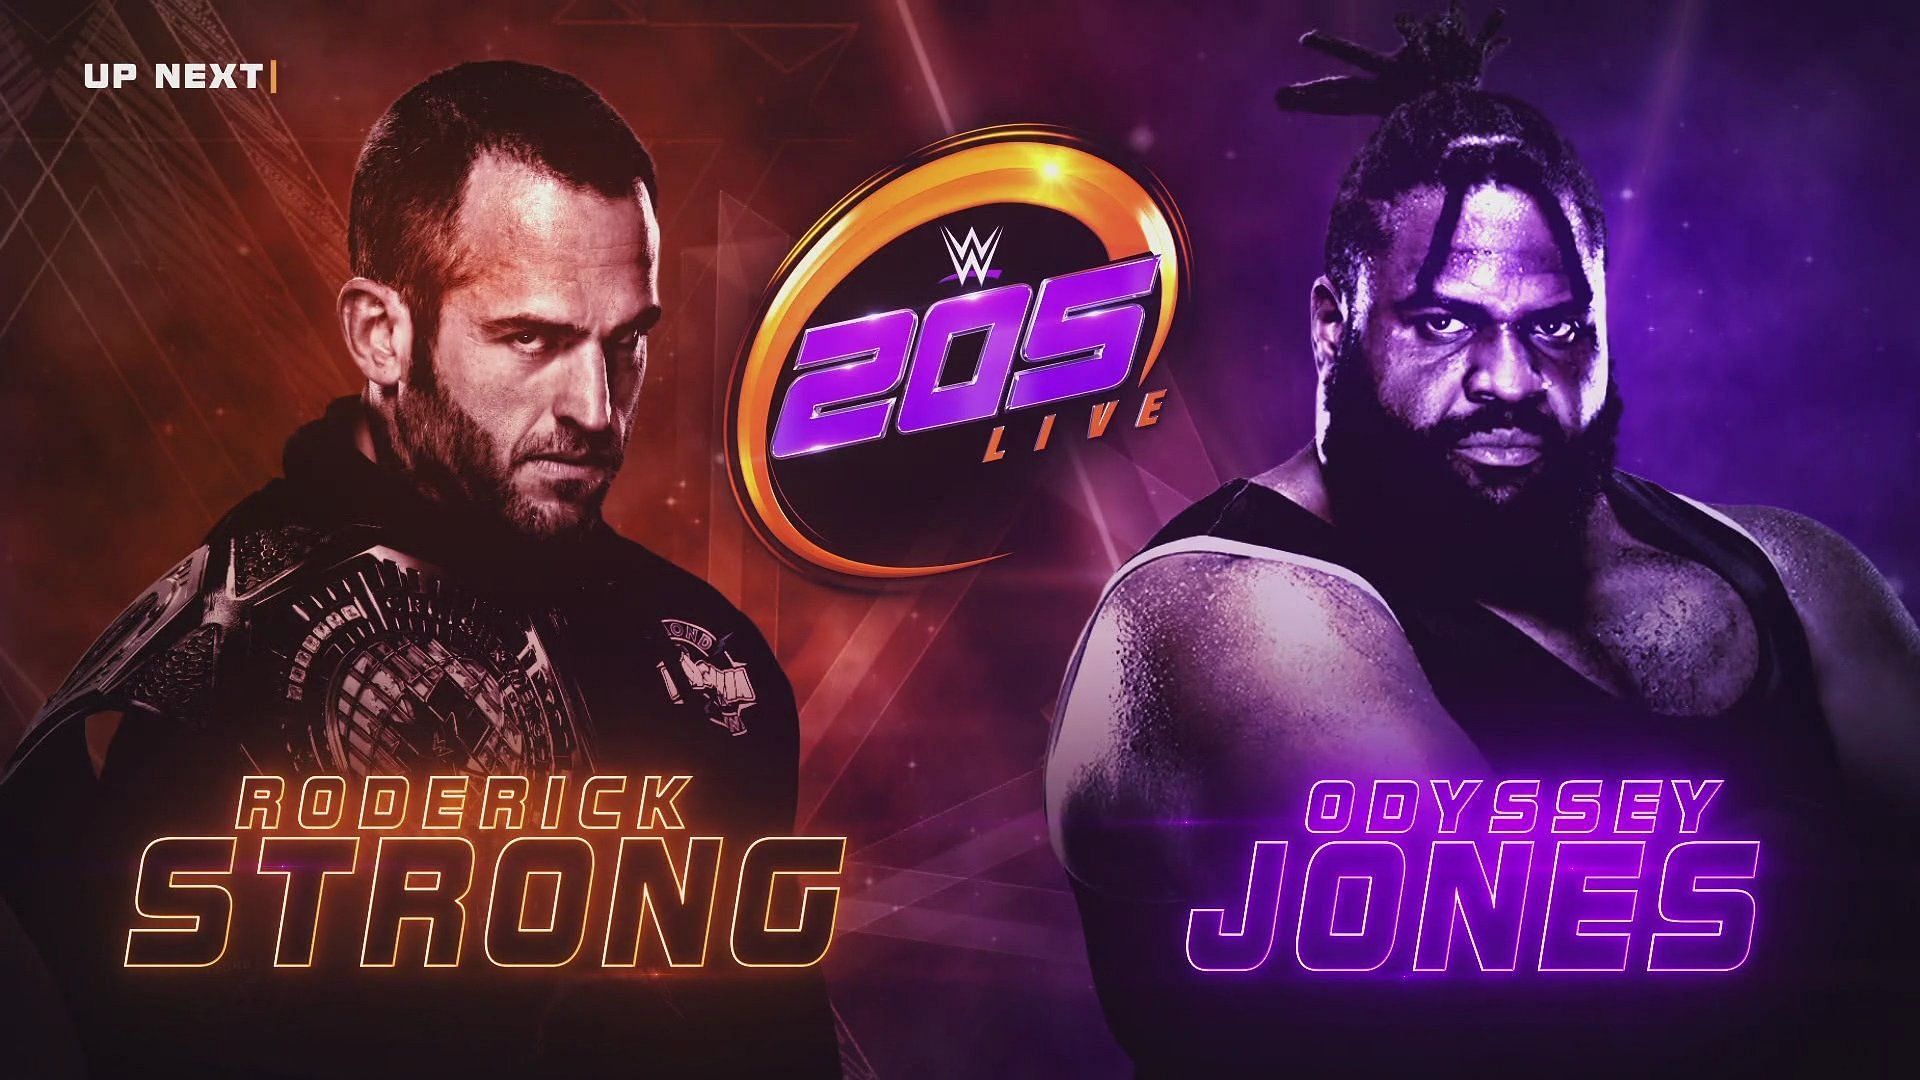 205 Live had a stellar main event between Roderick Strong and Odyssey Jones